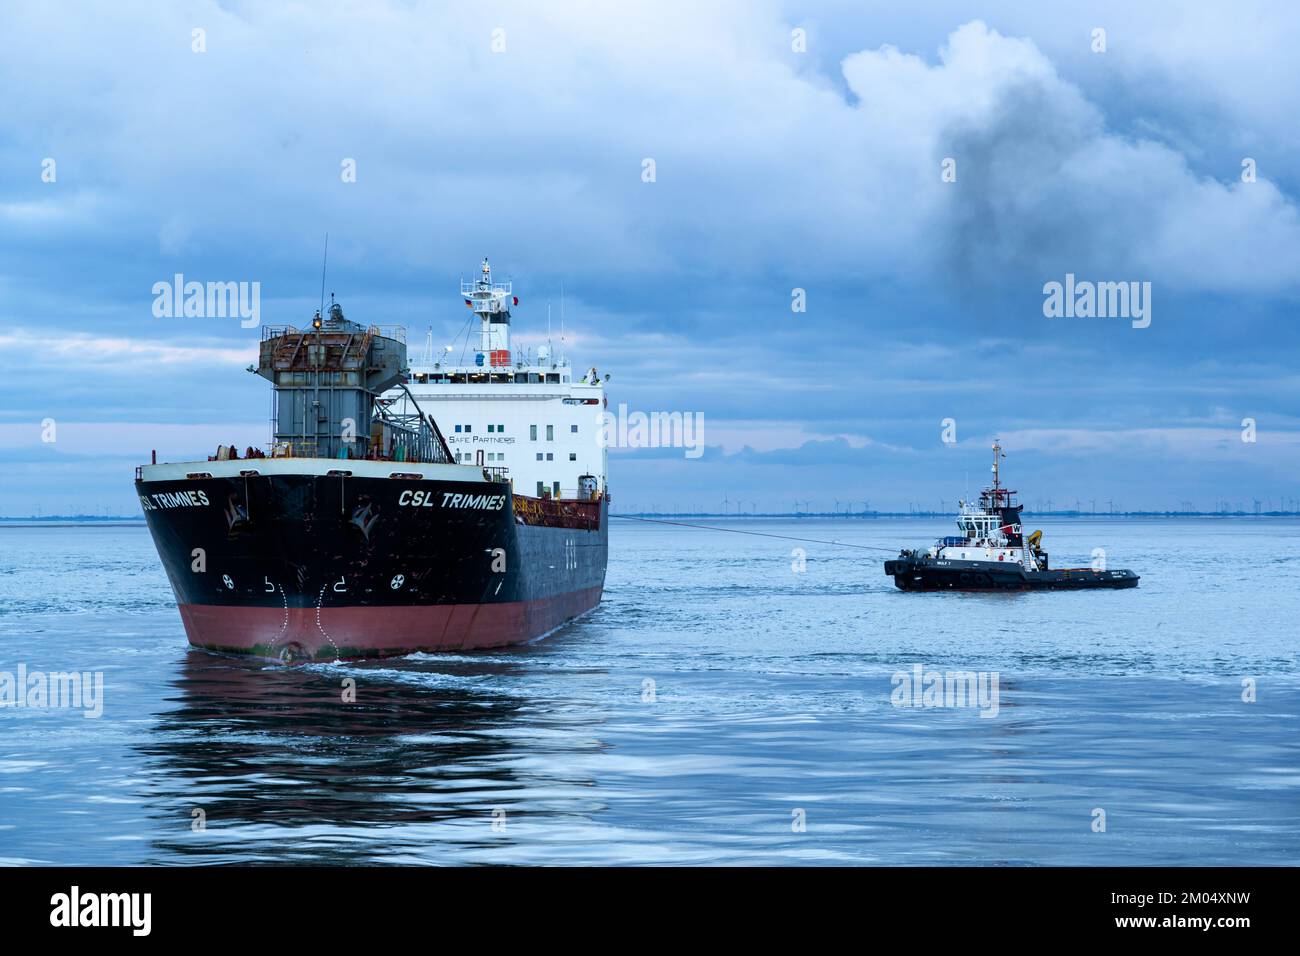 self discharging bulk Carrier CSL TRIMNES leaving the port of Cuxhaven Stock Photo